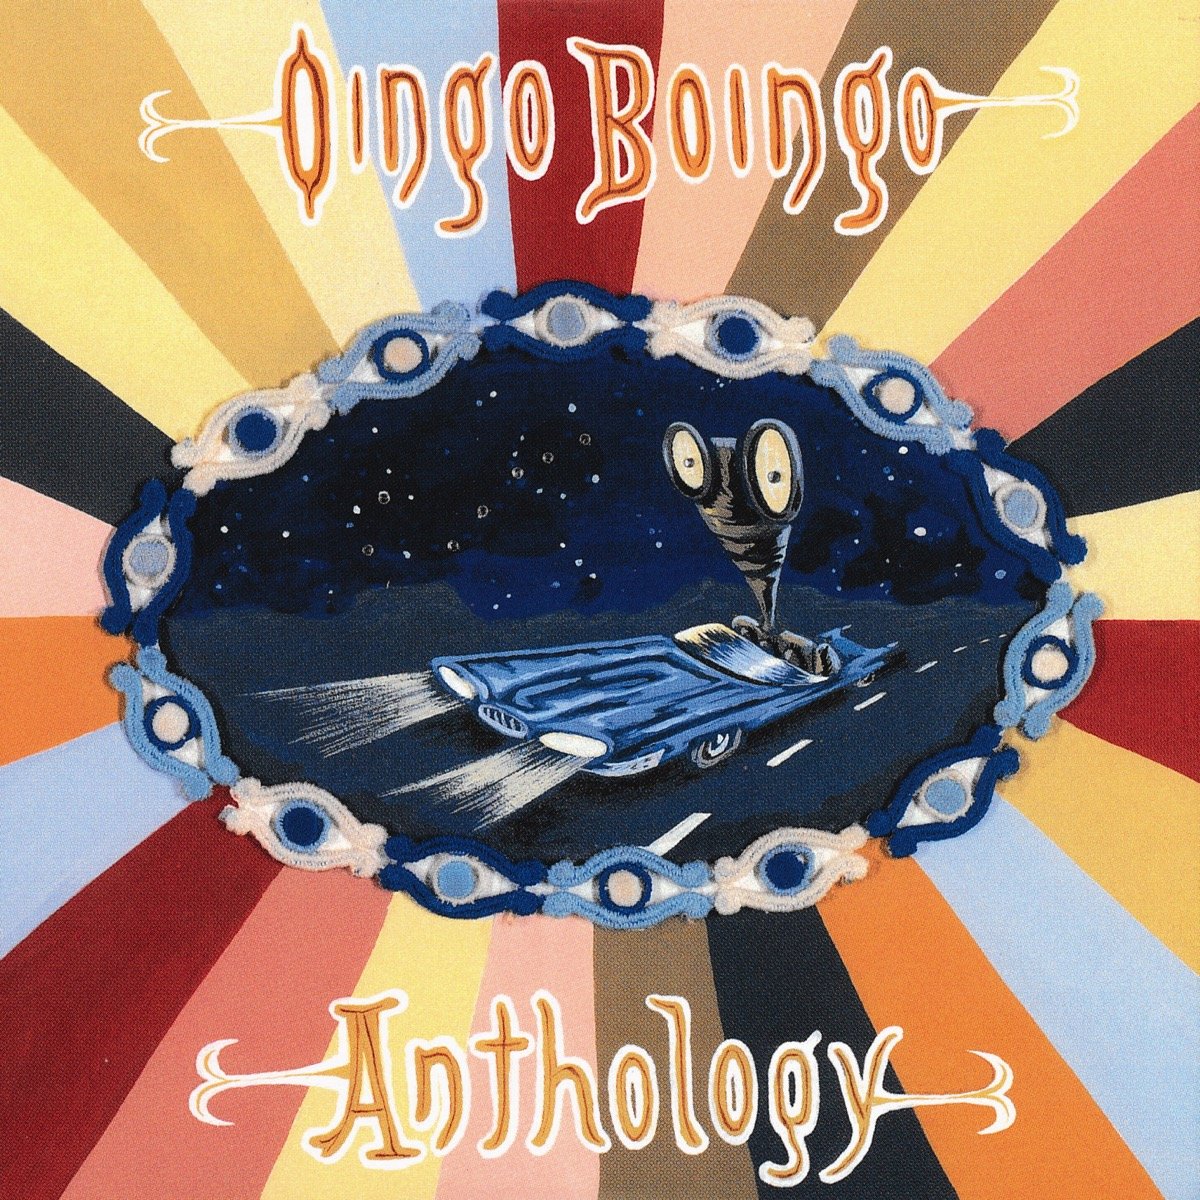 Oingo Boingo - All The Pieces, Releases